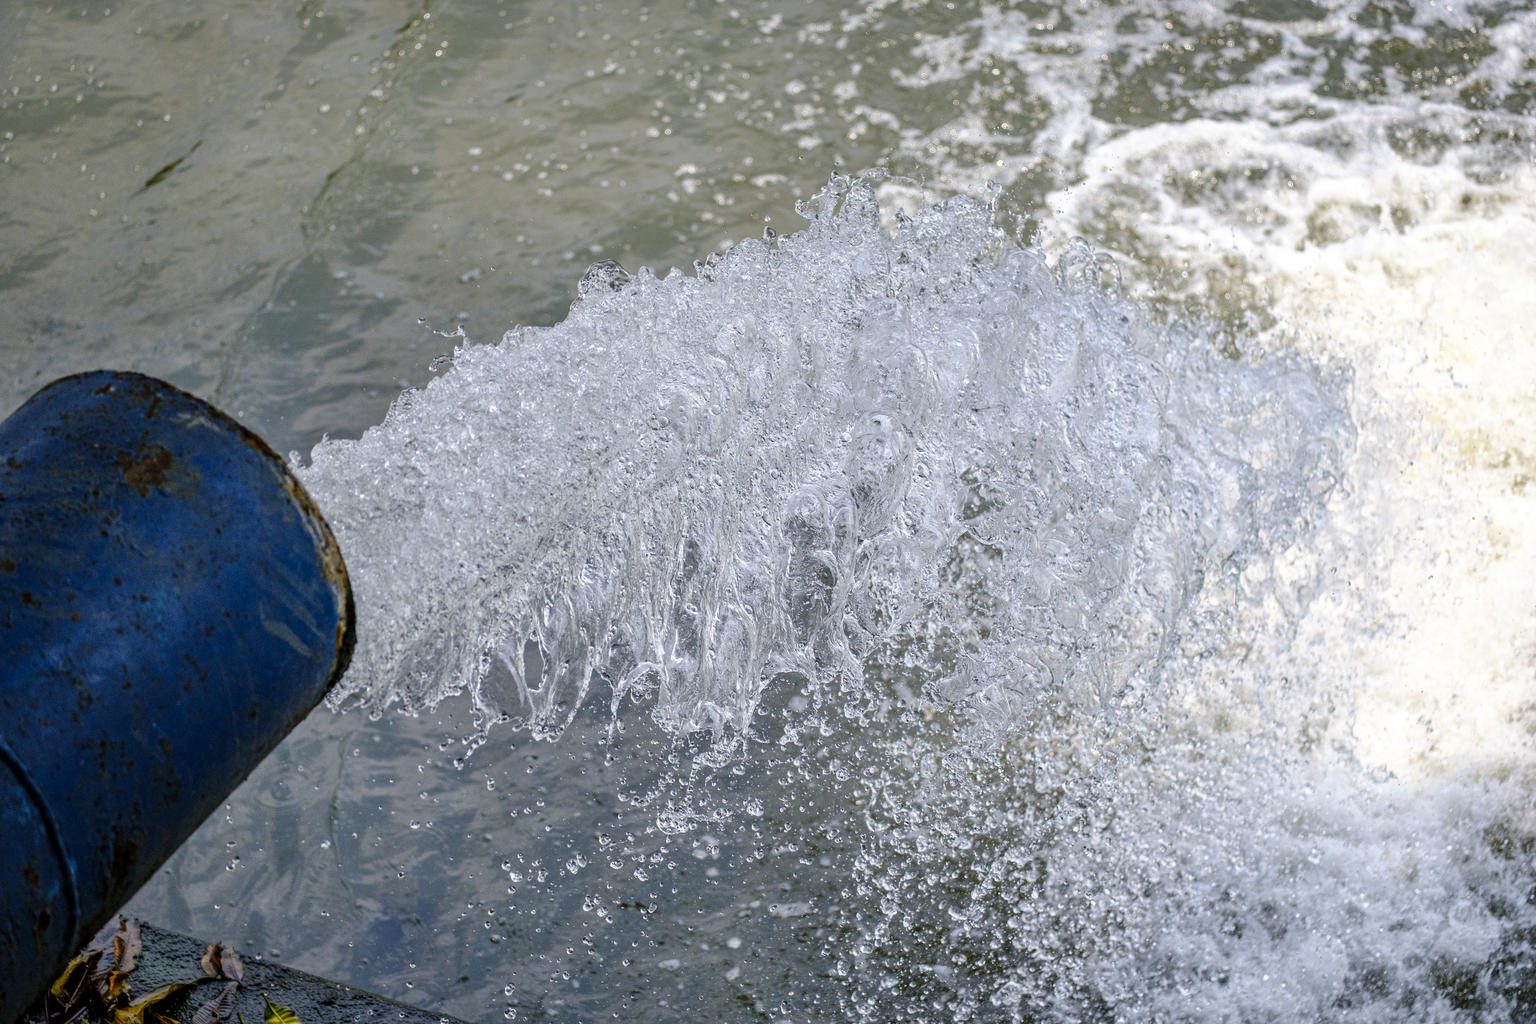 KnowESG_Equinox's water stewardship report